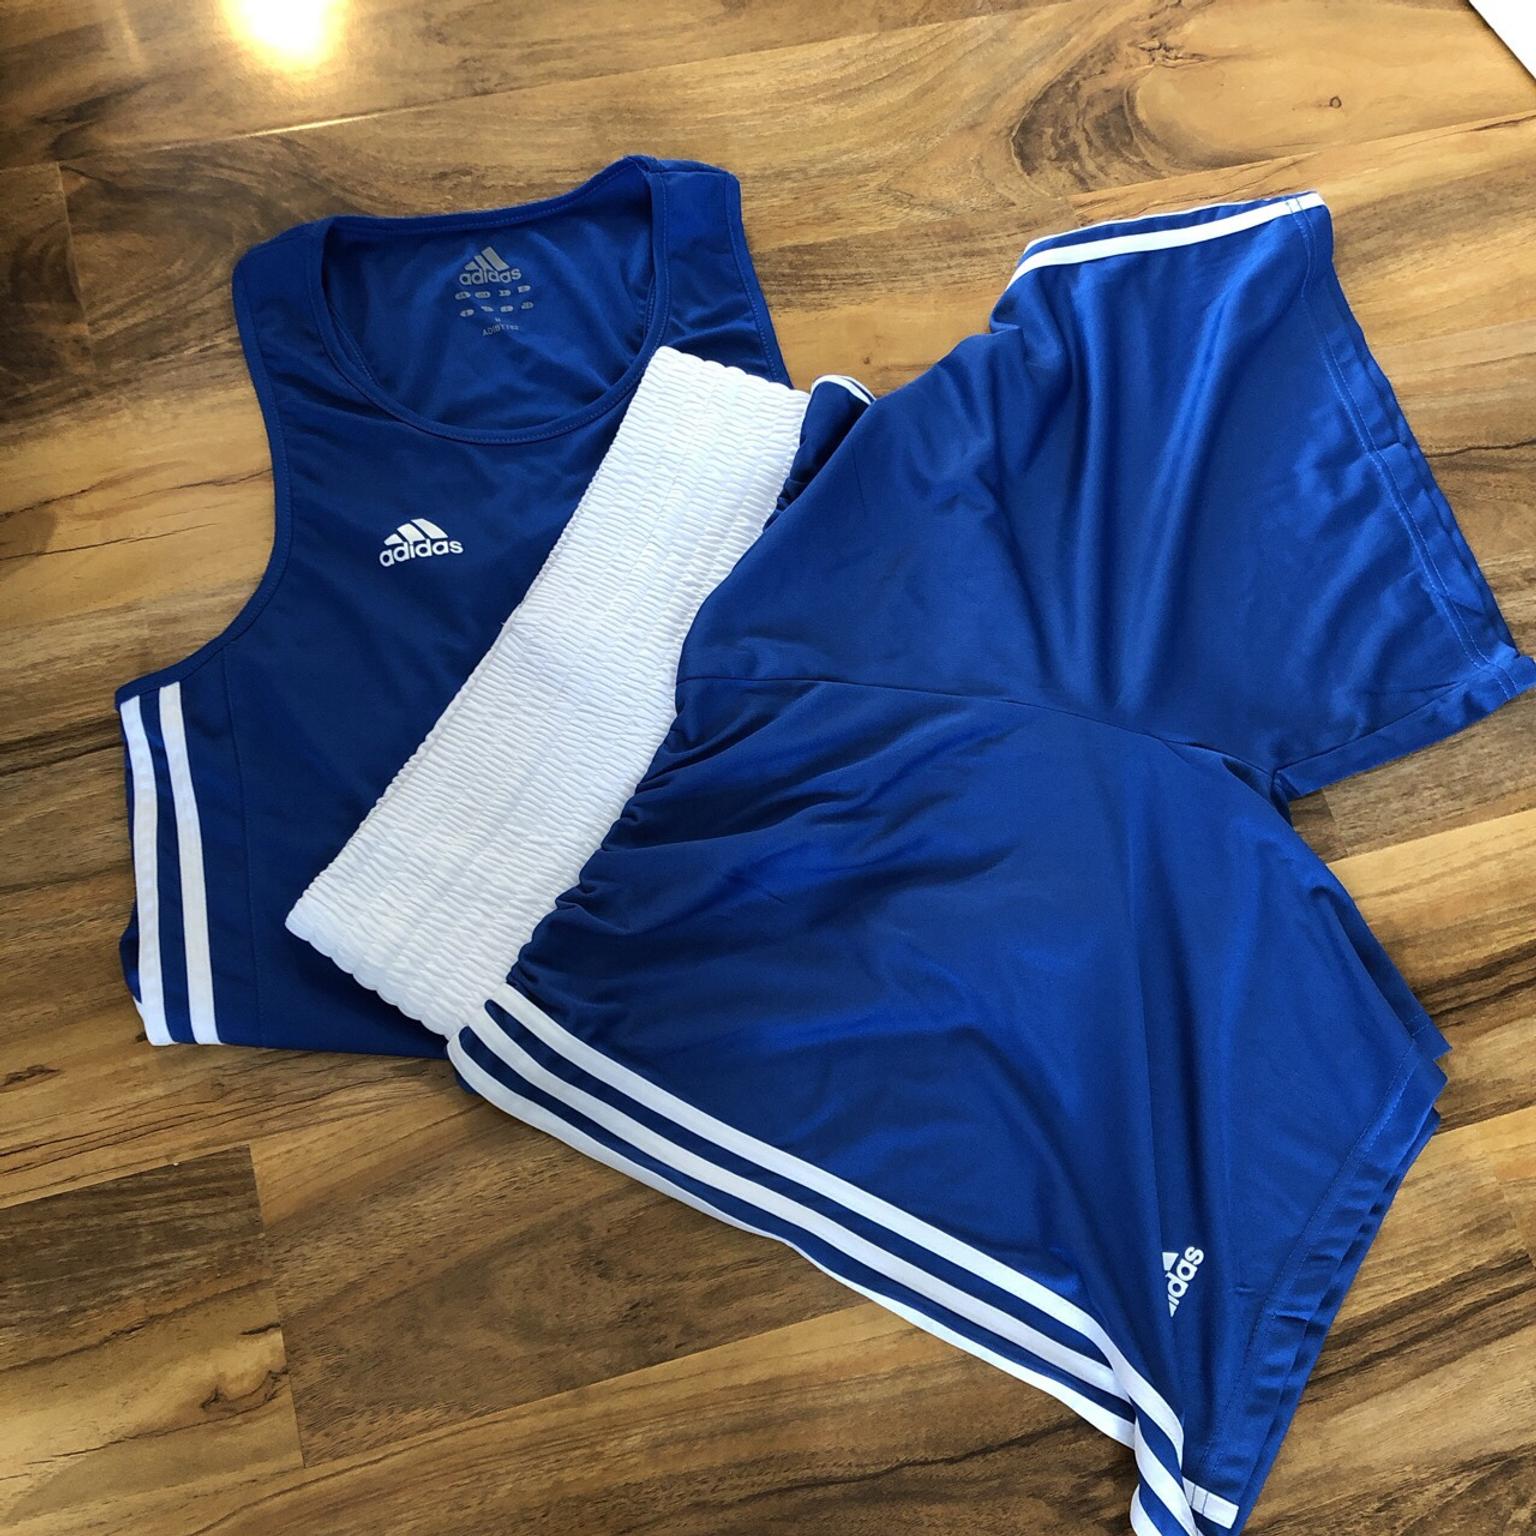 adidas boxing vest and shorts set